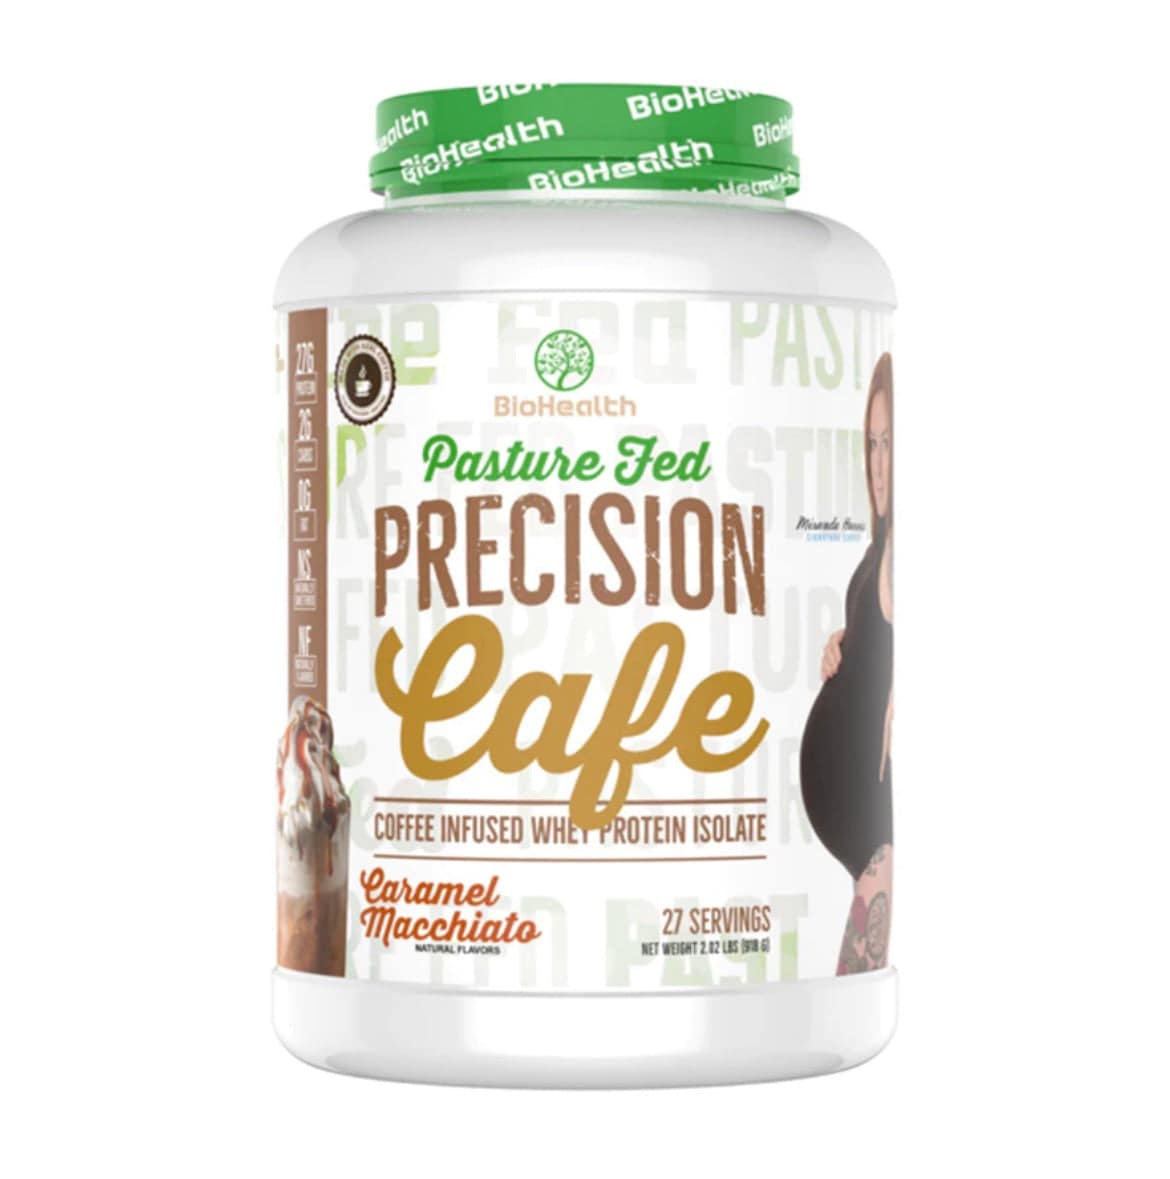 Pasture Fed Precision Cafe- Biohealth - Prime Sports Nutrition